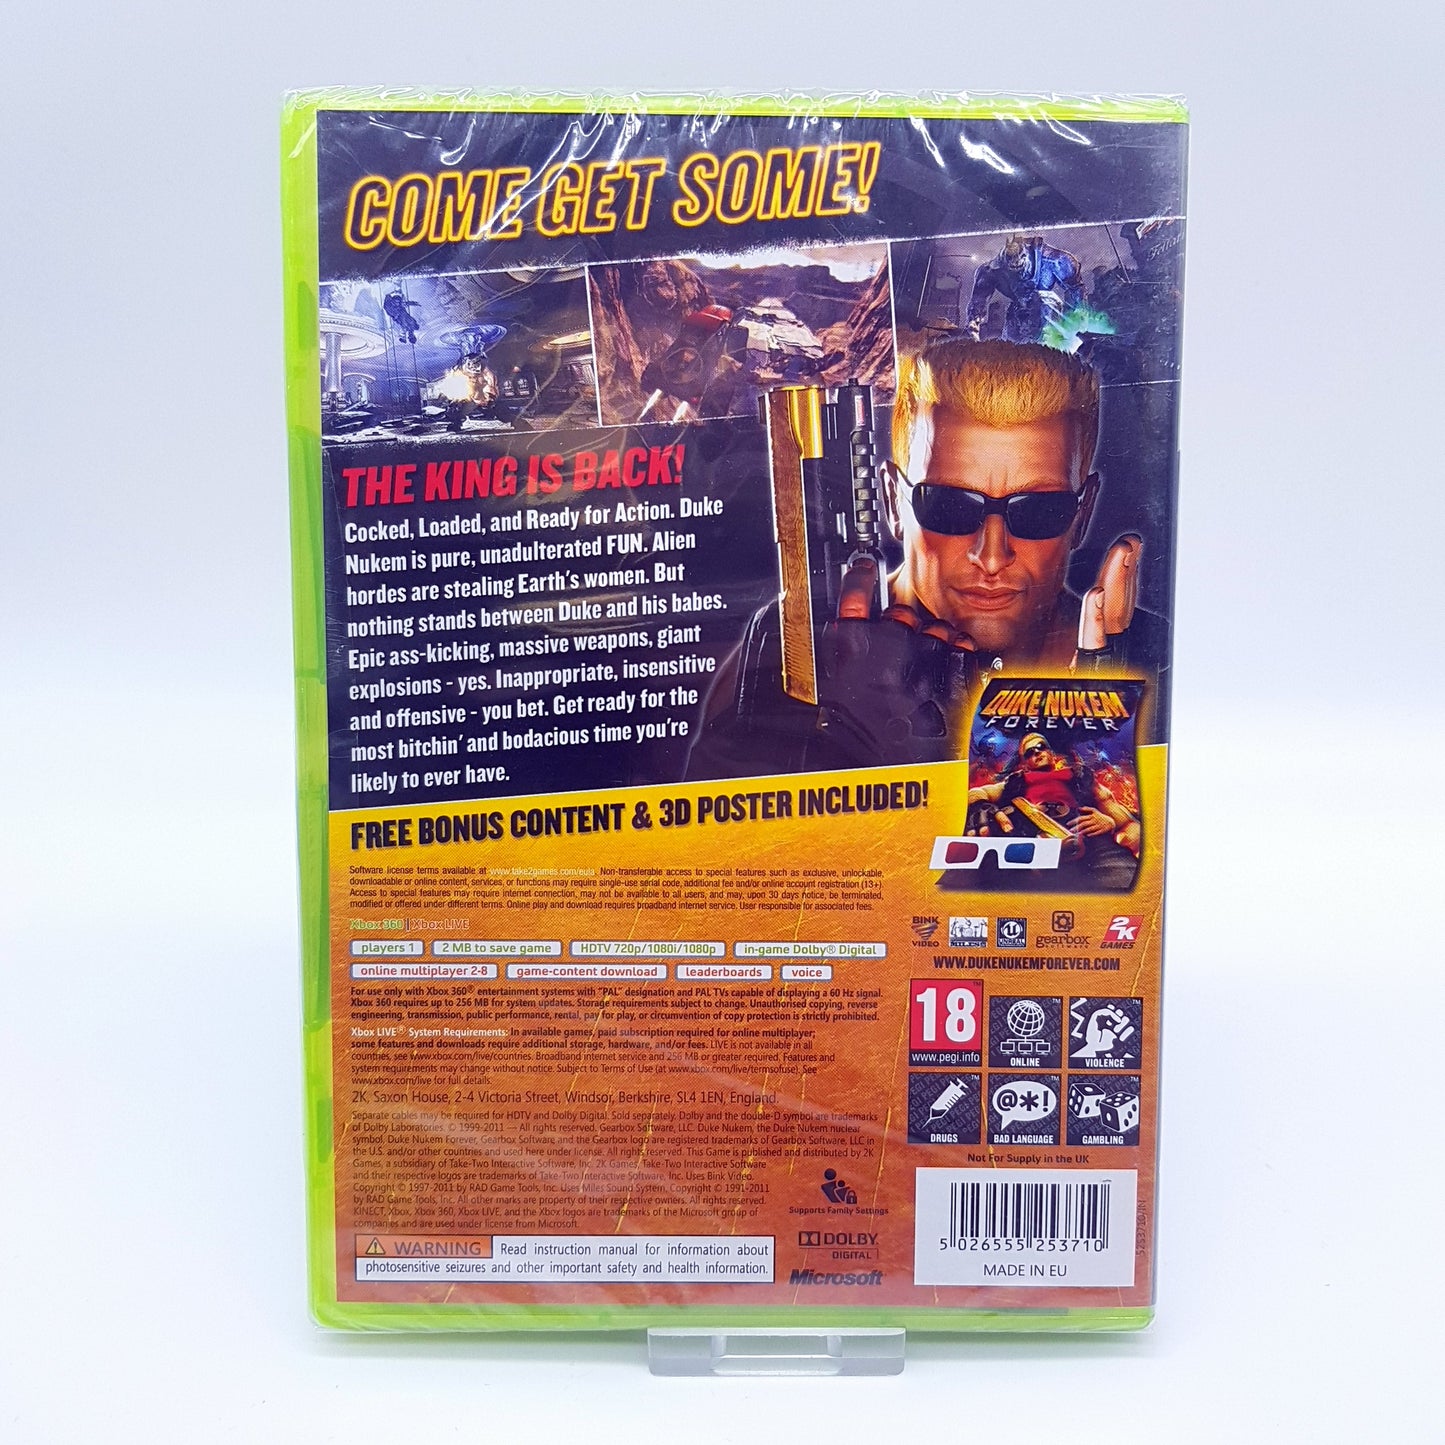 Microsoft Xbox360 - Duke's Kick Ass Edition Duke Nukem Forever - NEU sealed